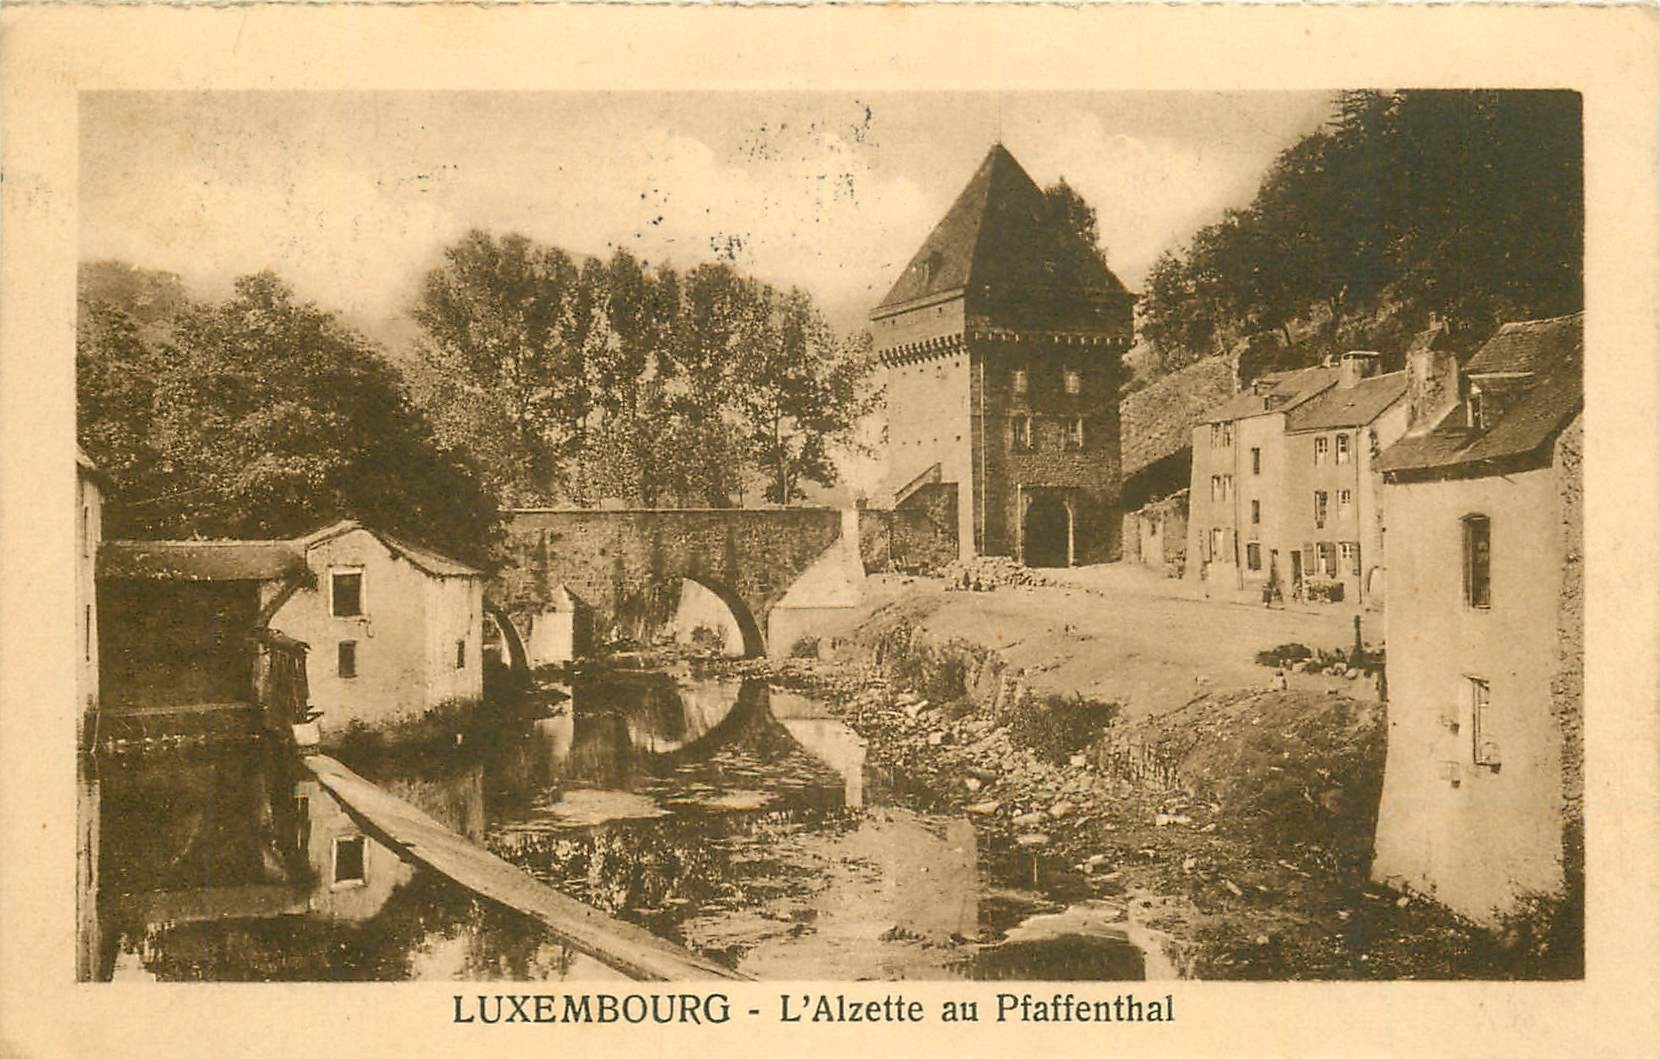 WW LUXEMBOURG. L'Alzette au Pfaffenthal